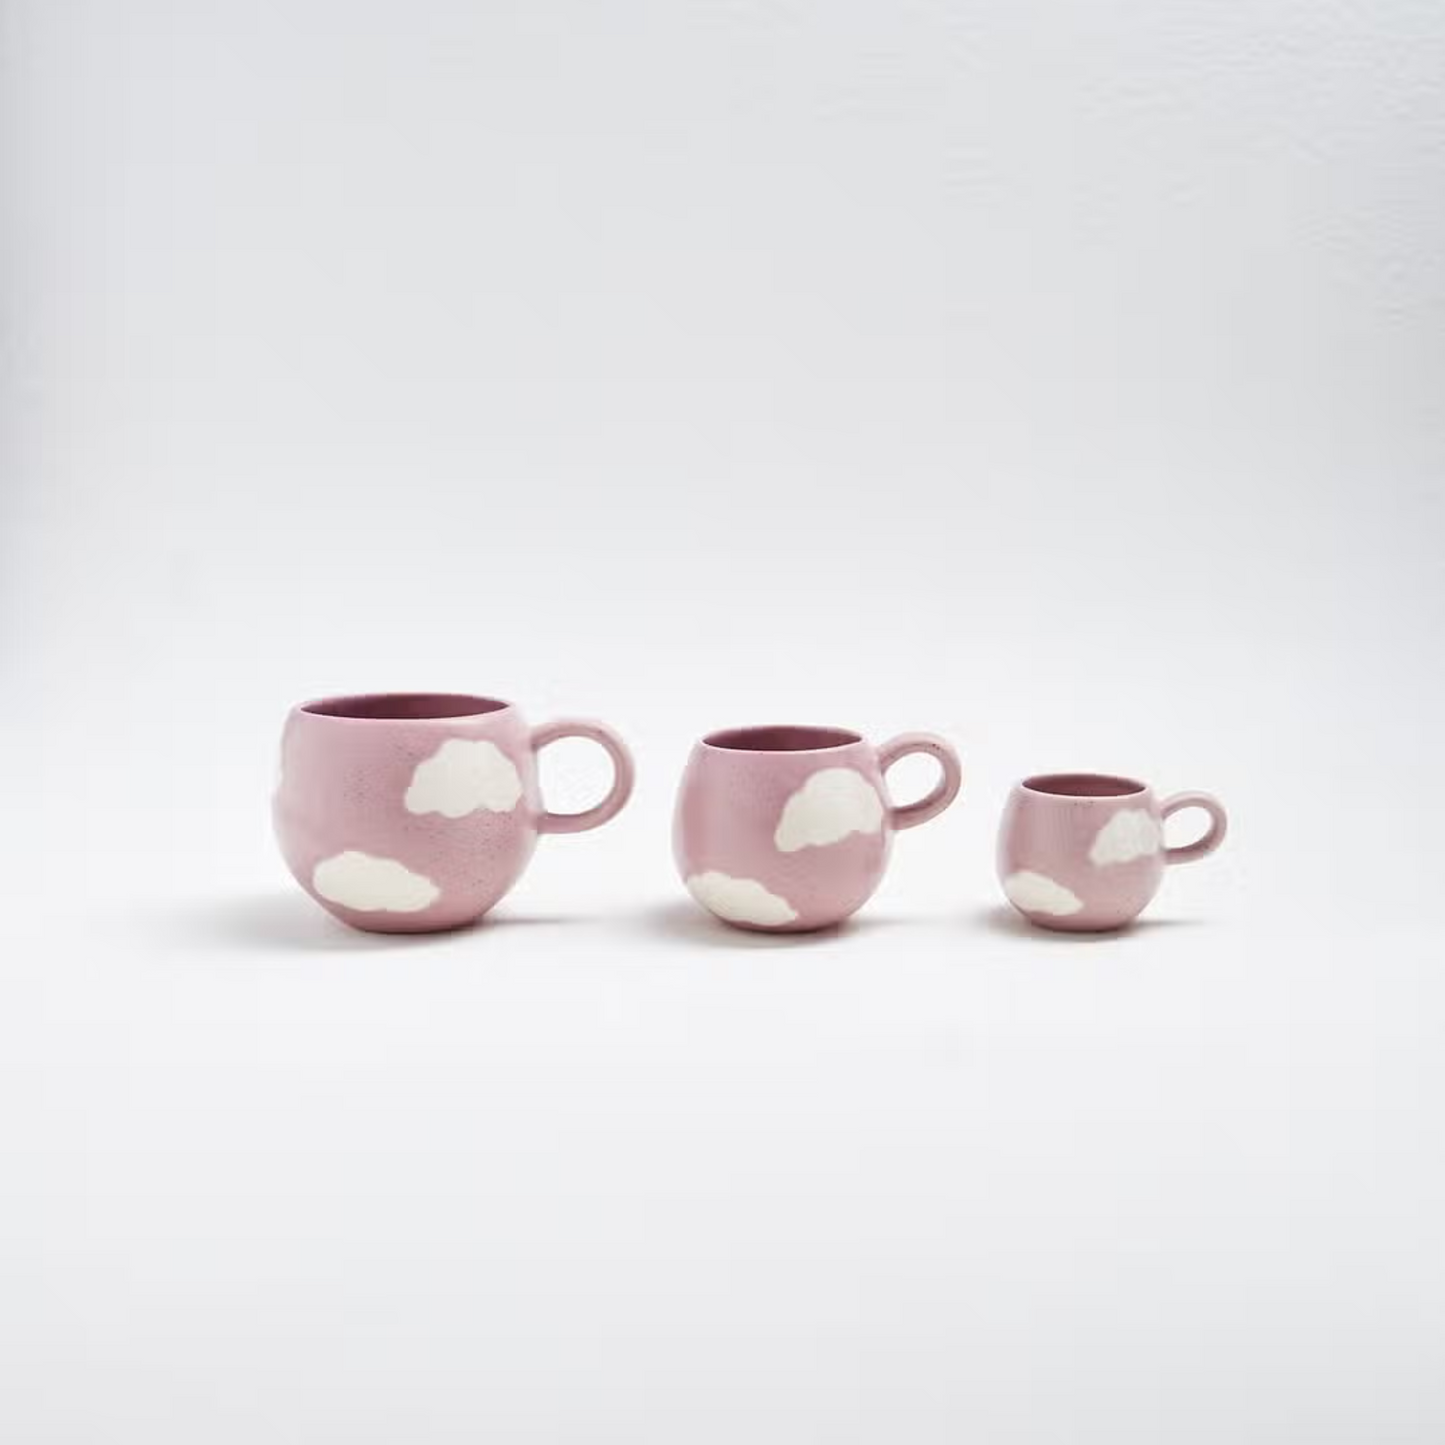 Tasse, Keramikbecher, Pink Cloud (500ml) - EGG BACK HOME